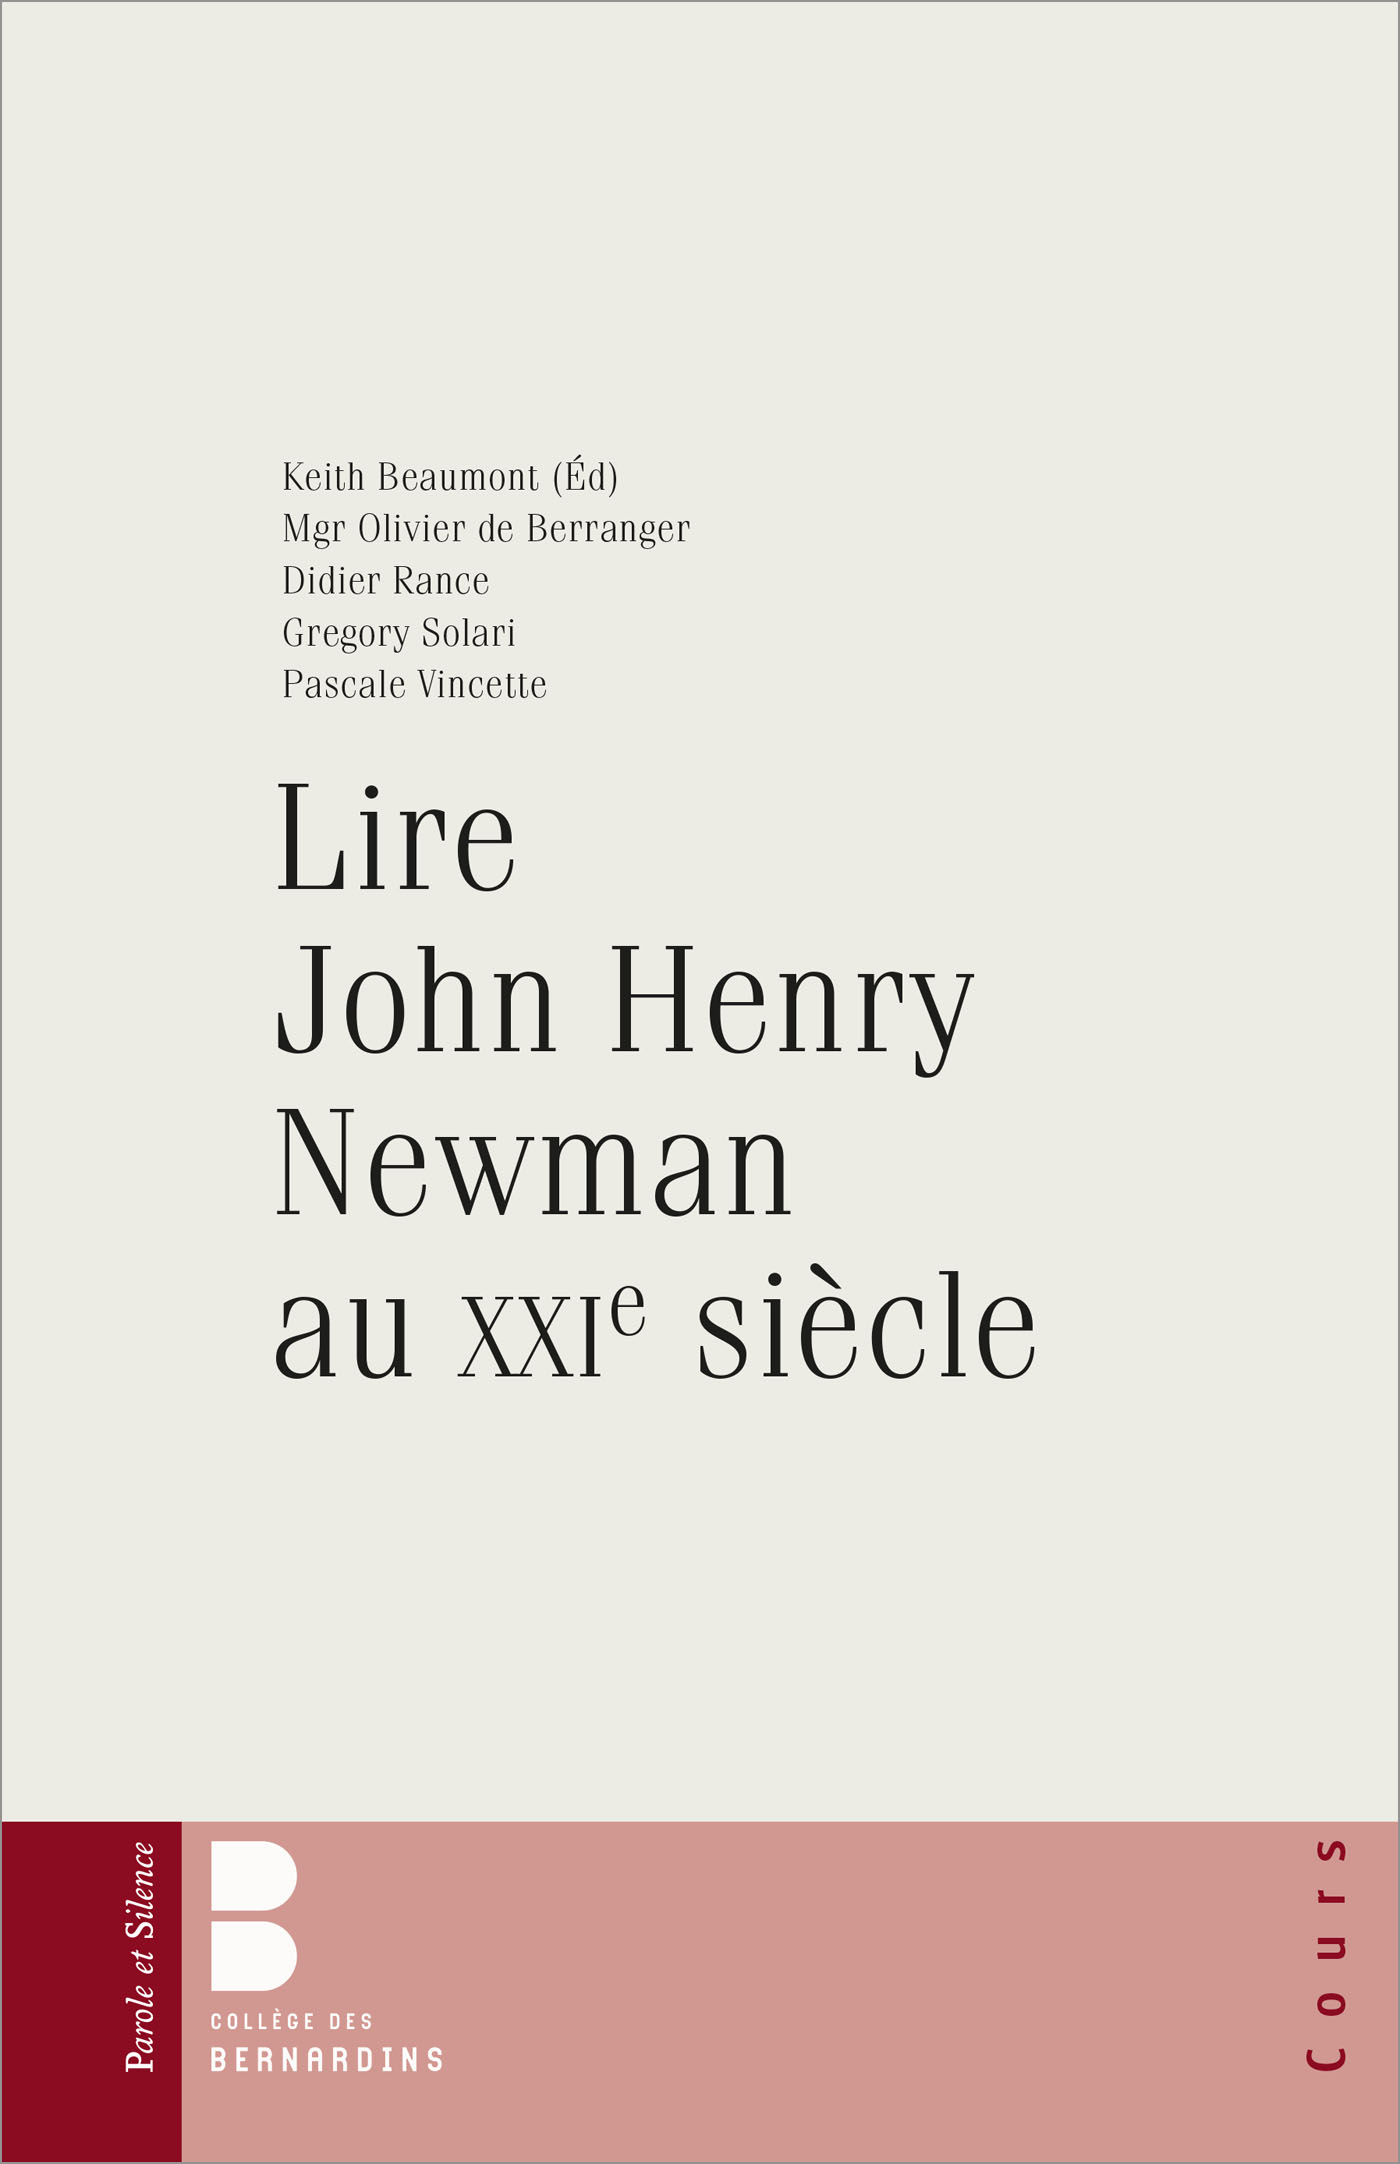 Lire John Henry Newman au XXIème siècle